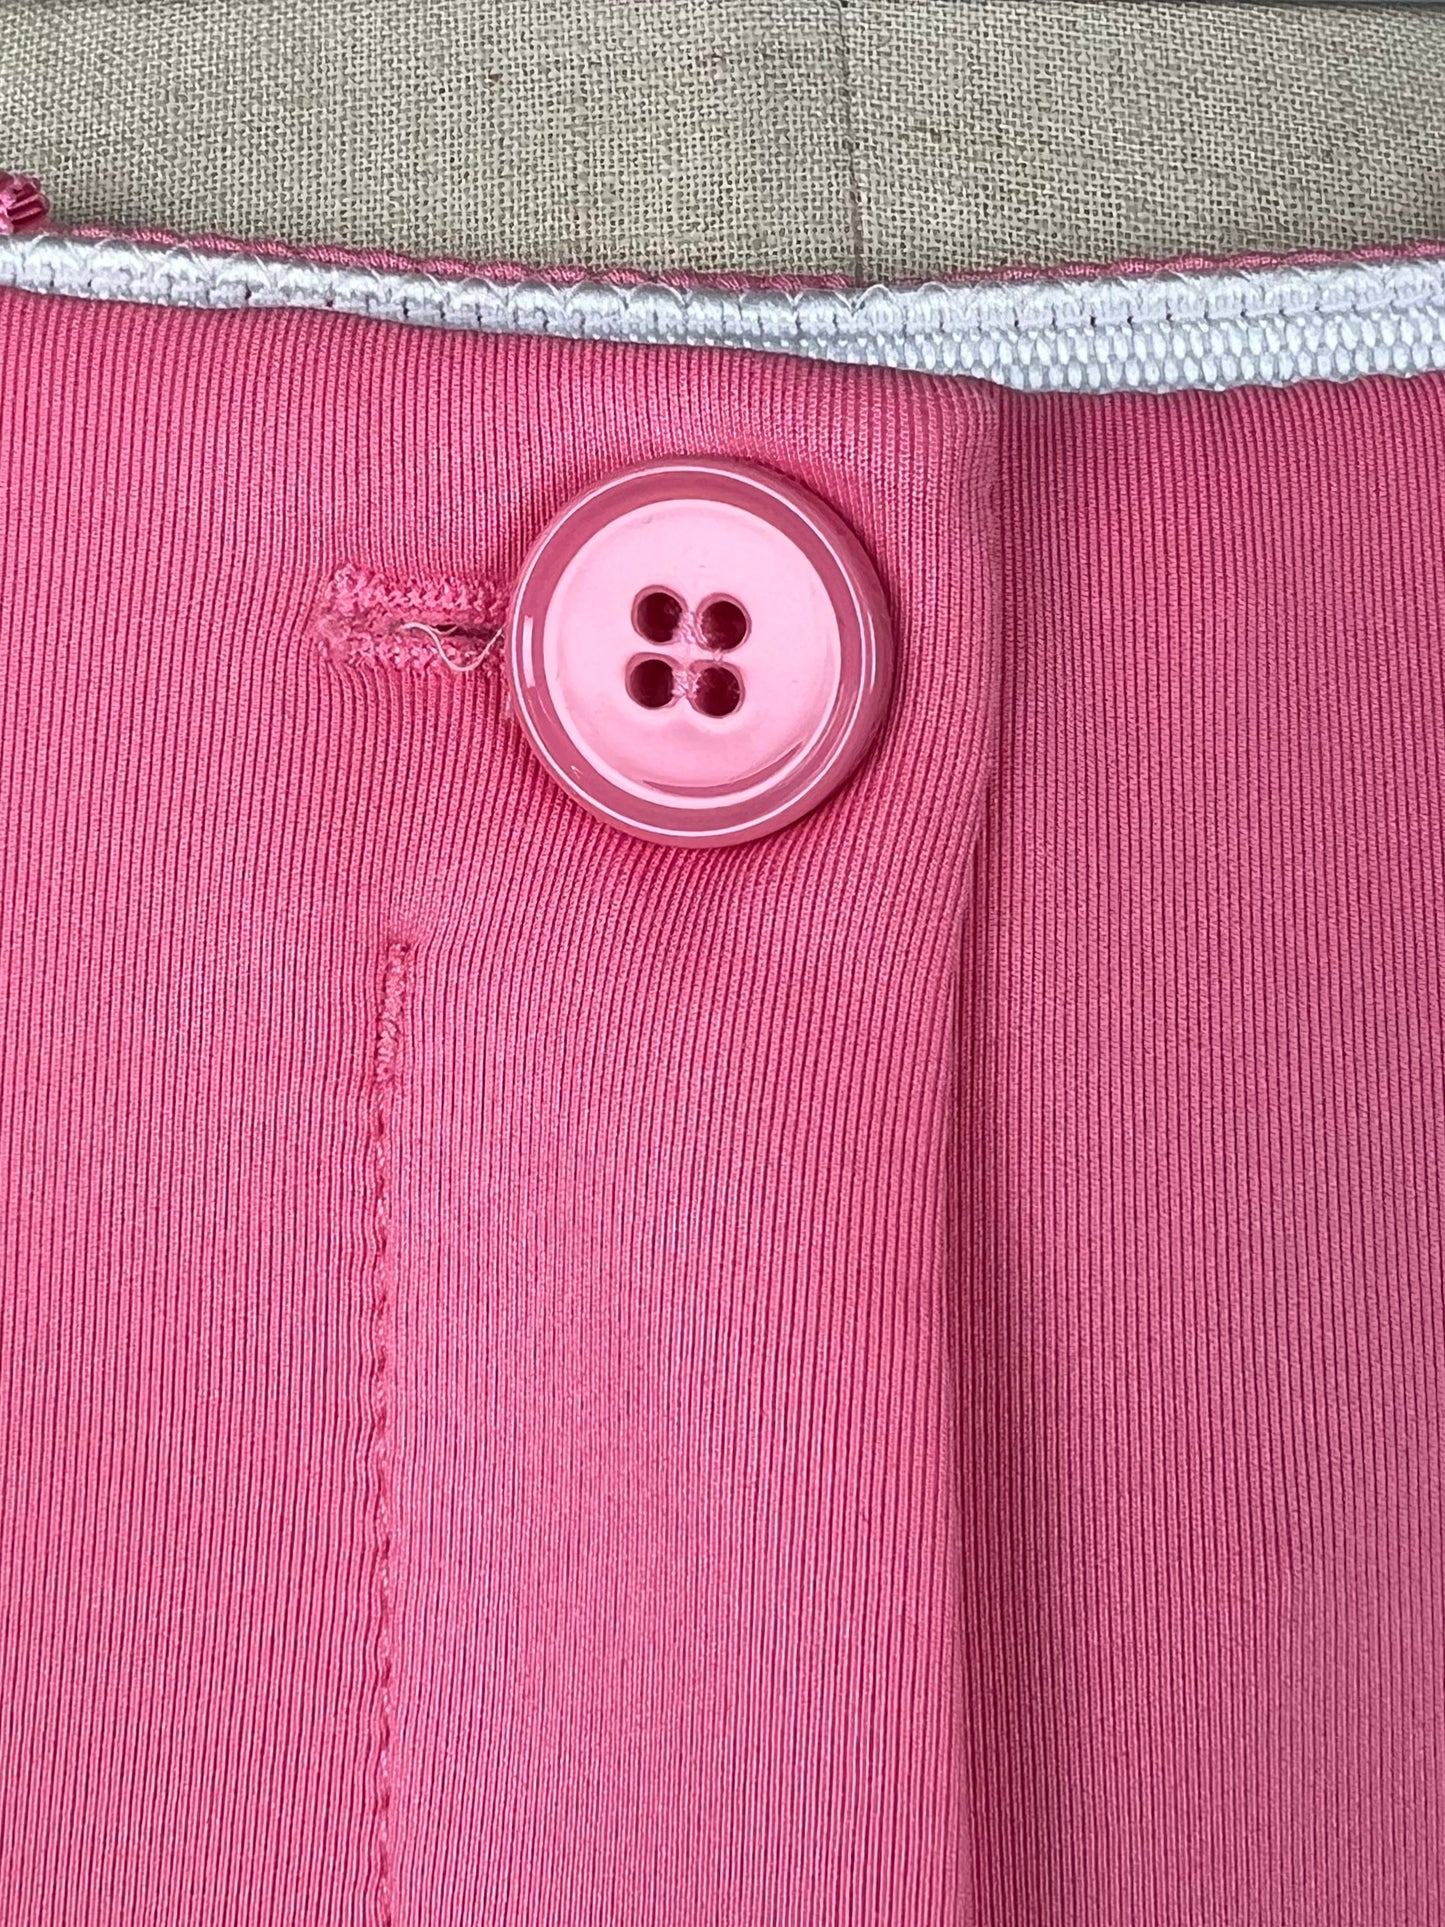 Pantalon bootcut techno chic rose bonheur (XS et S)